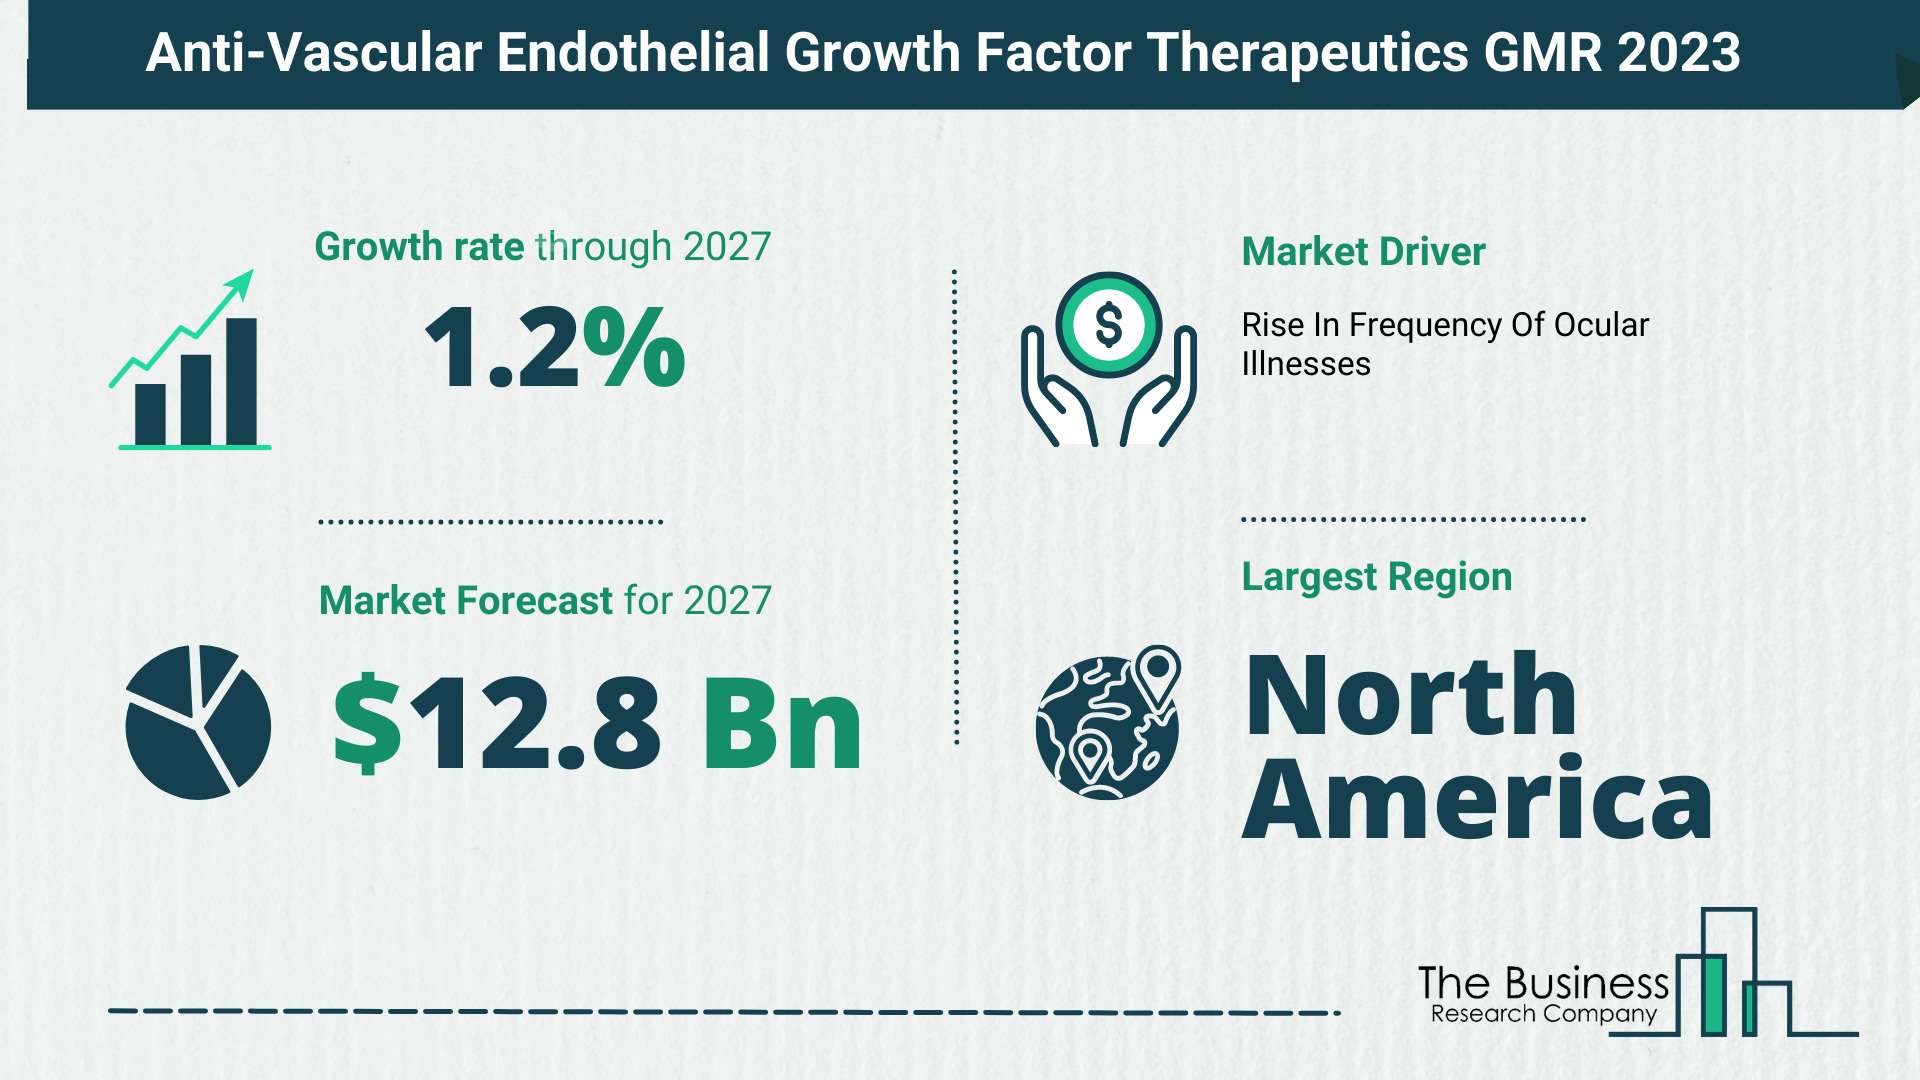 Global Anti-Vascular Endothelial Growth Factor Therapeutics Market